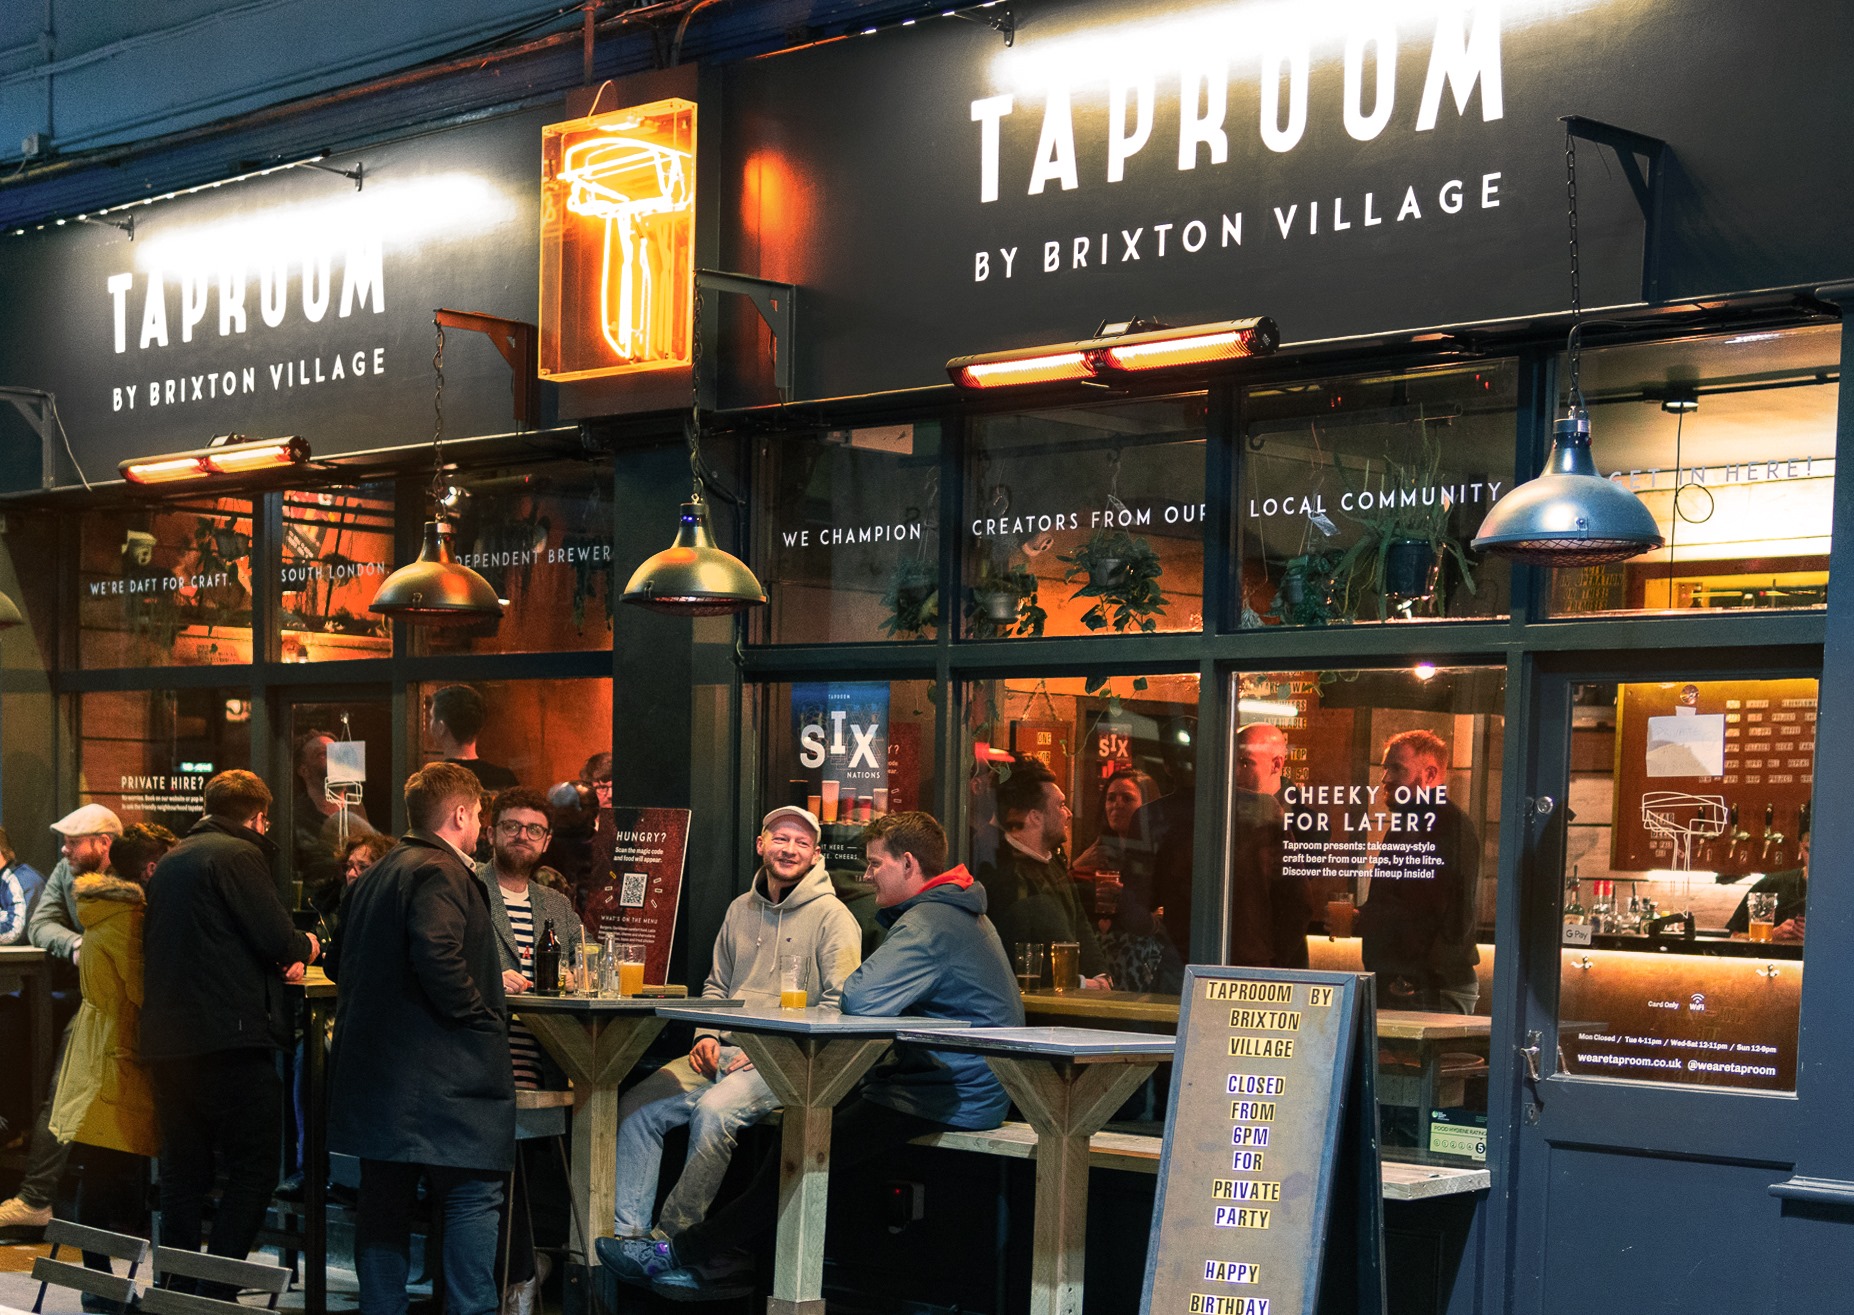 Taproom by Brixton Village